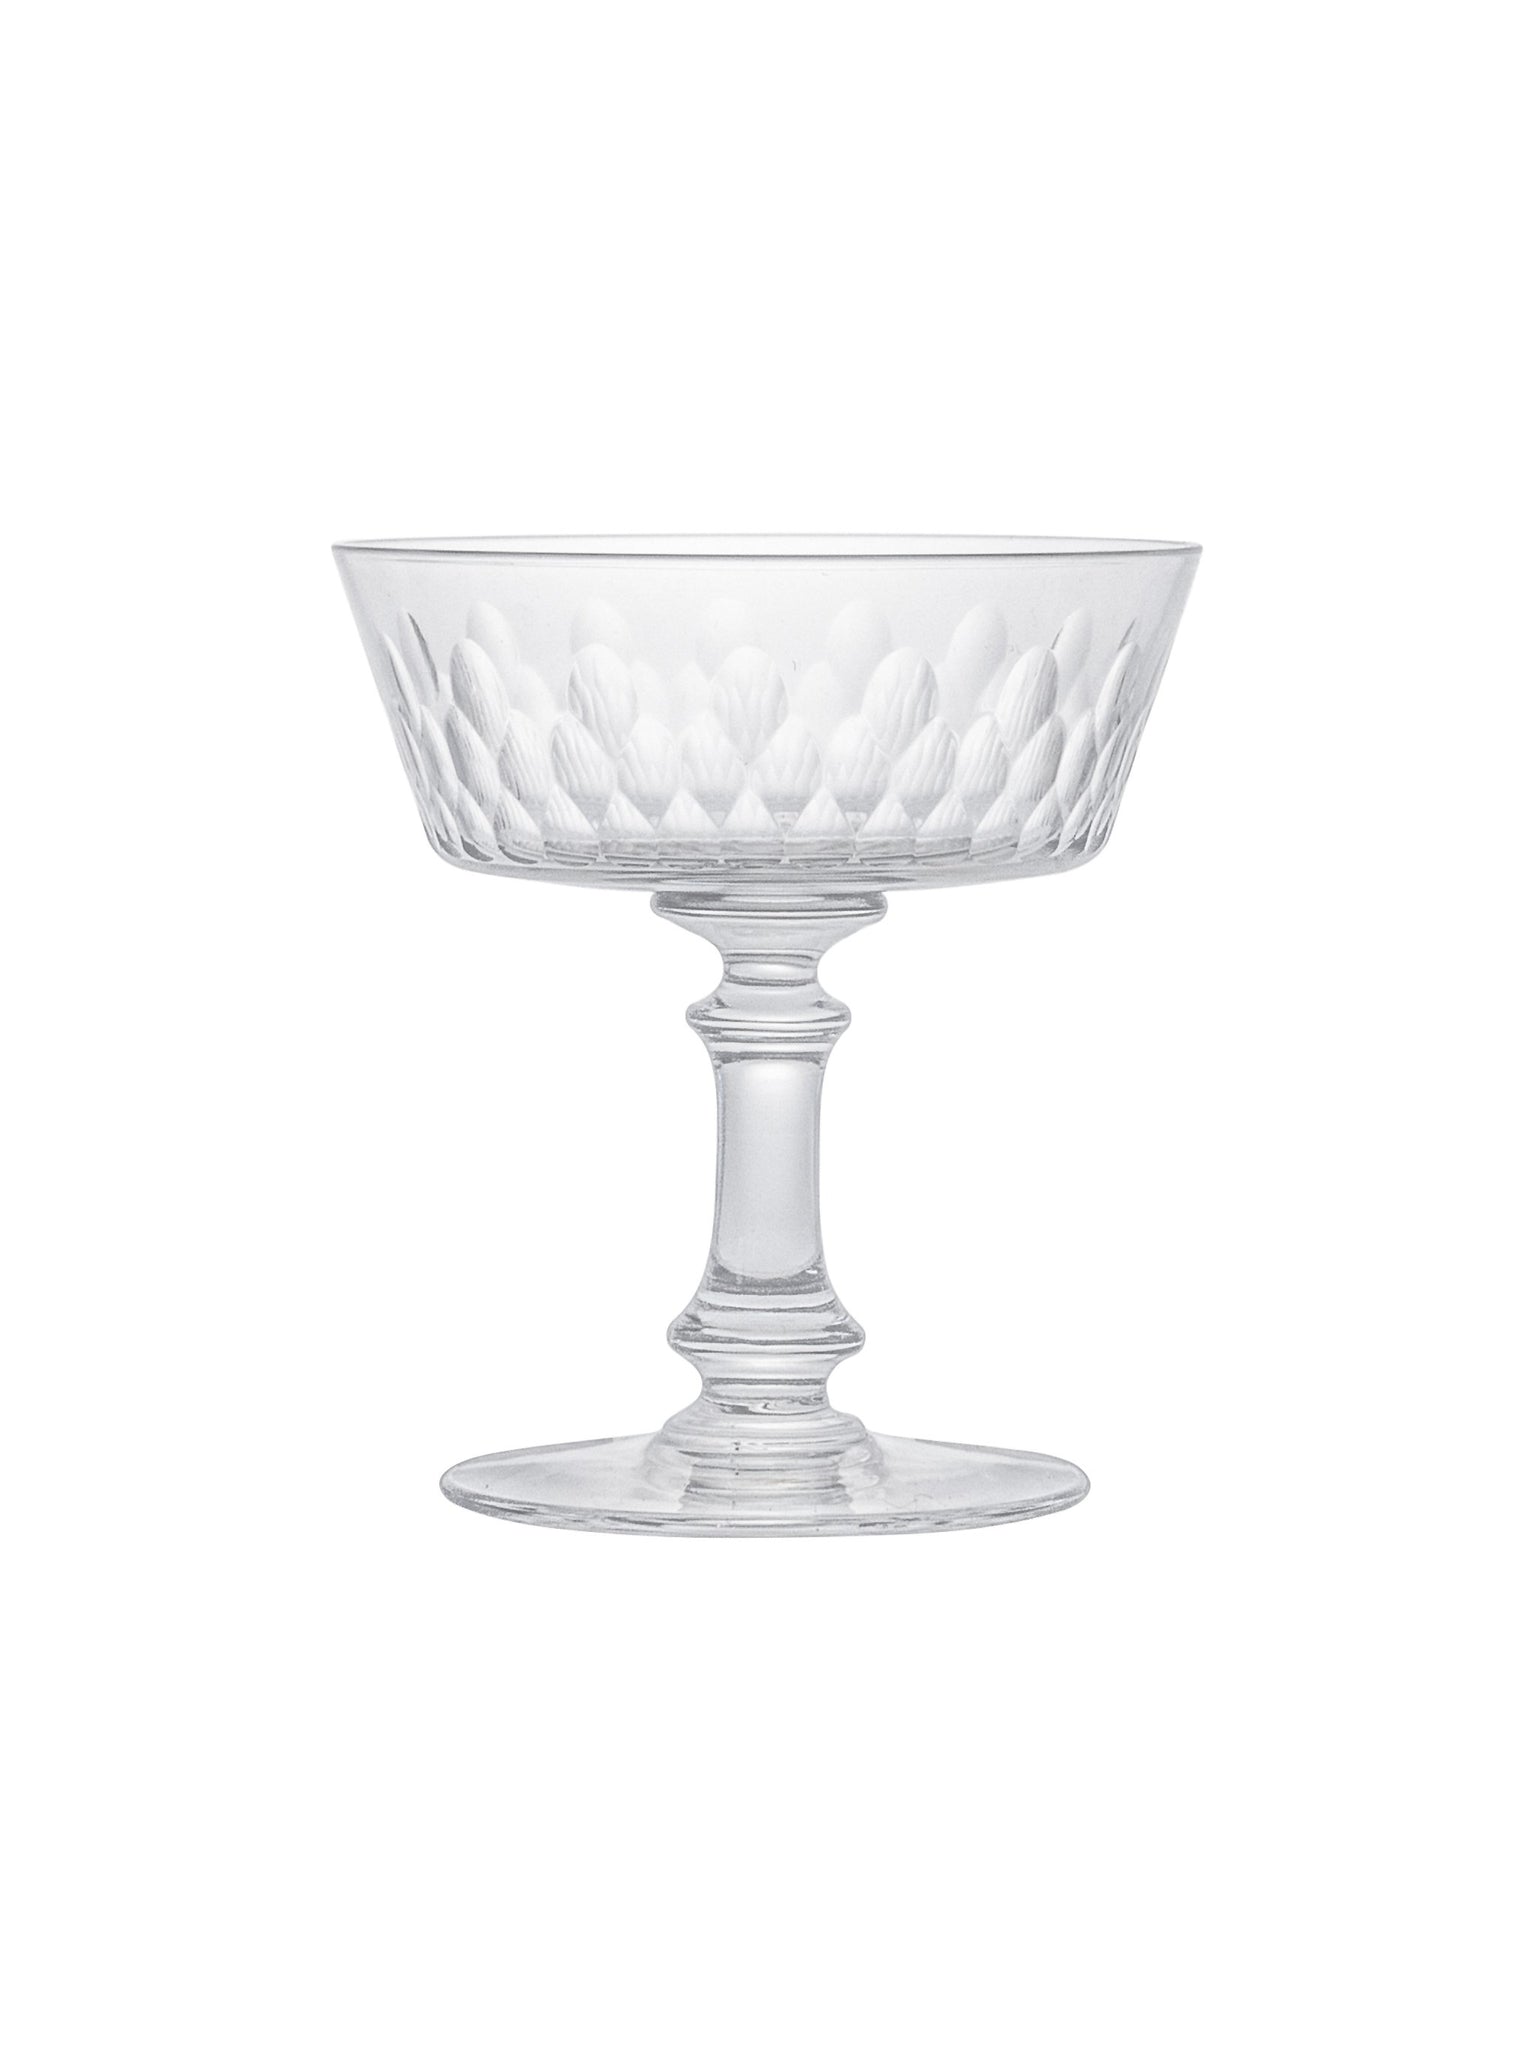 Vintage 1920s Baccarat Richelieu Champagne Glasses Weston Table